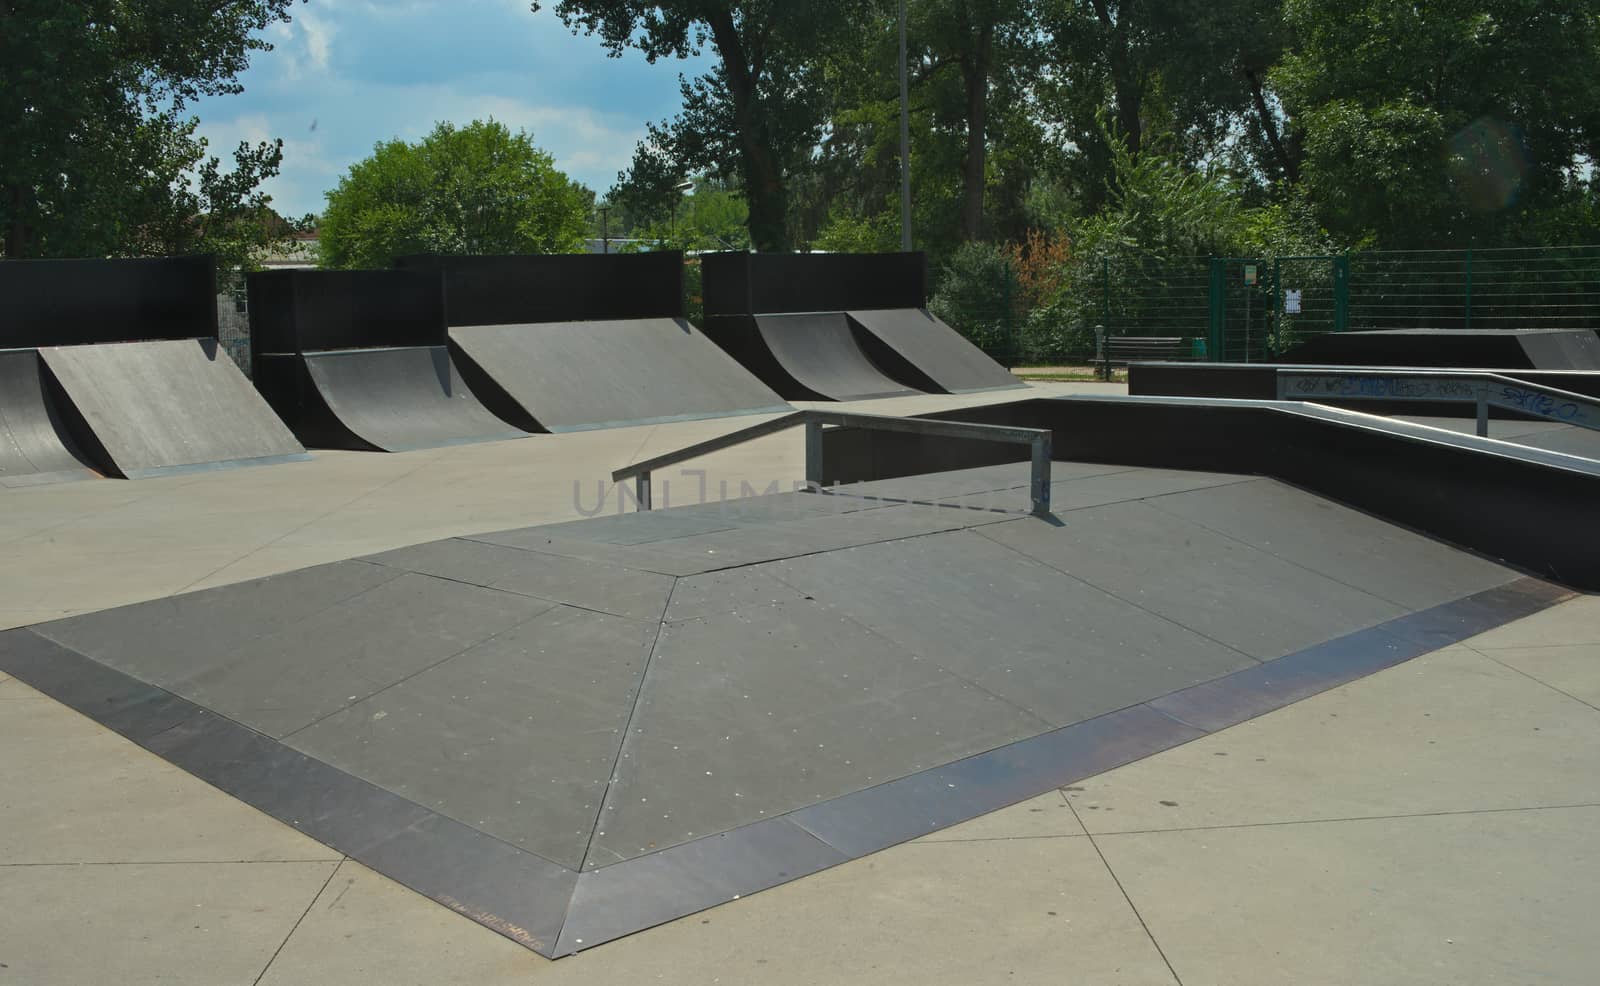 Empty Sports Complex Skateboard Park at Liman park, Novi Sad, Serbia